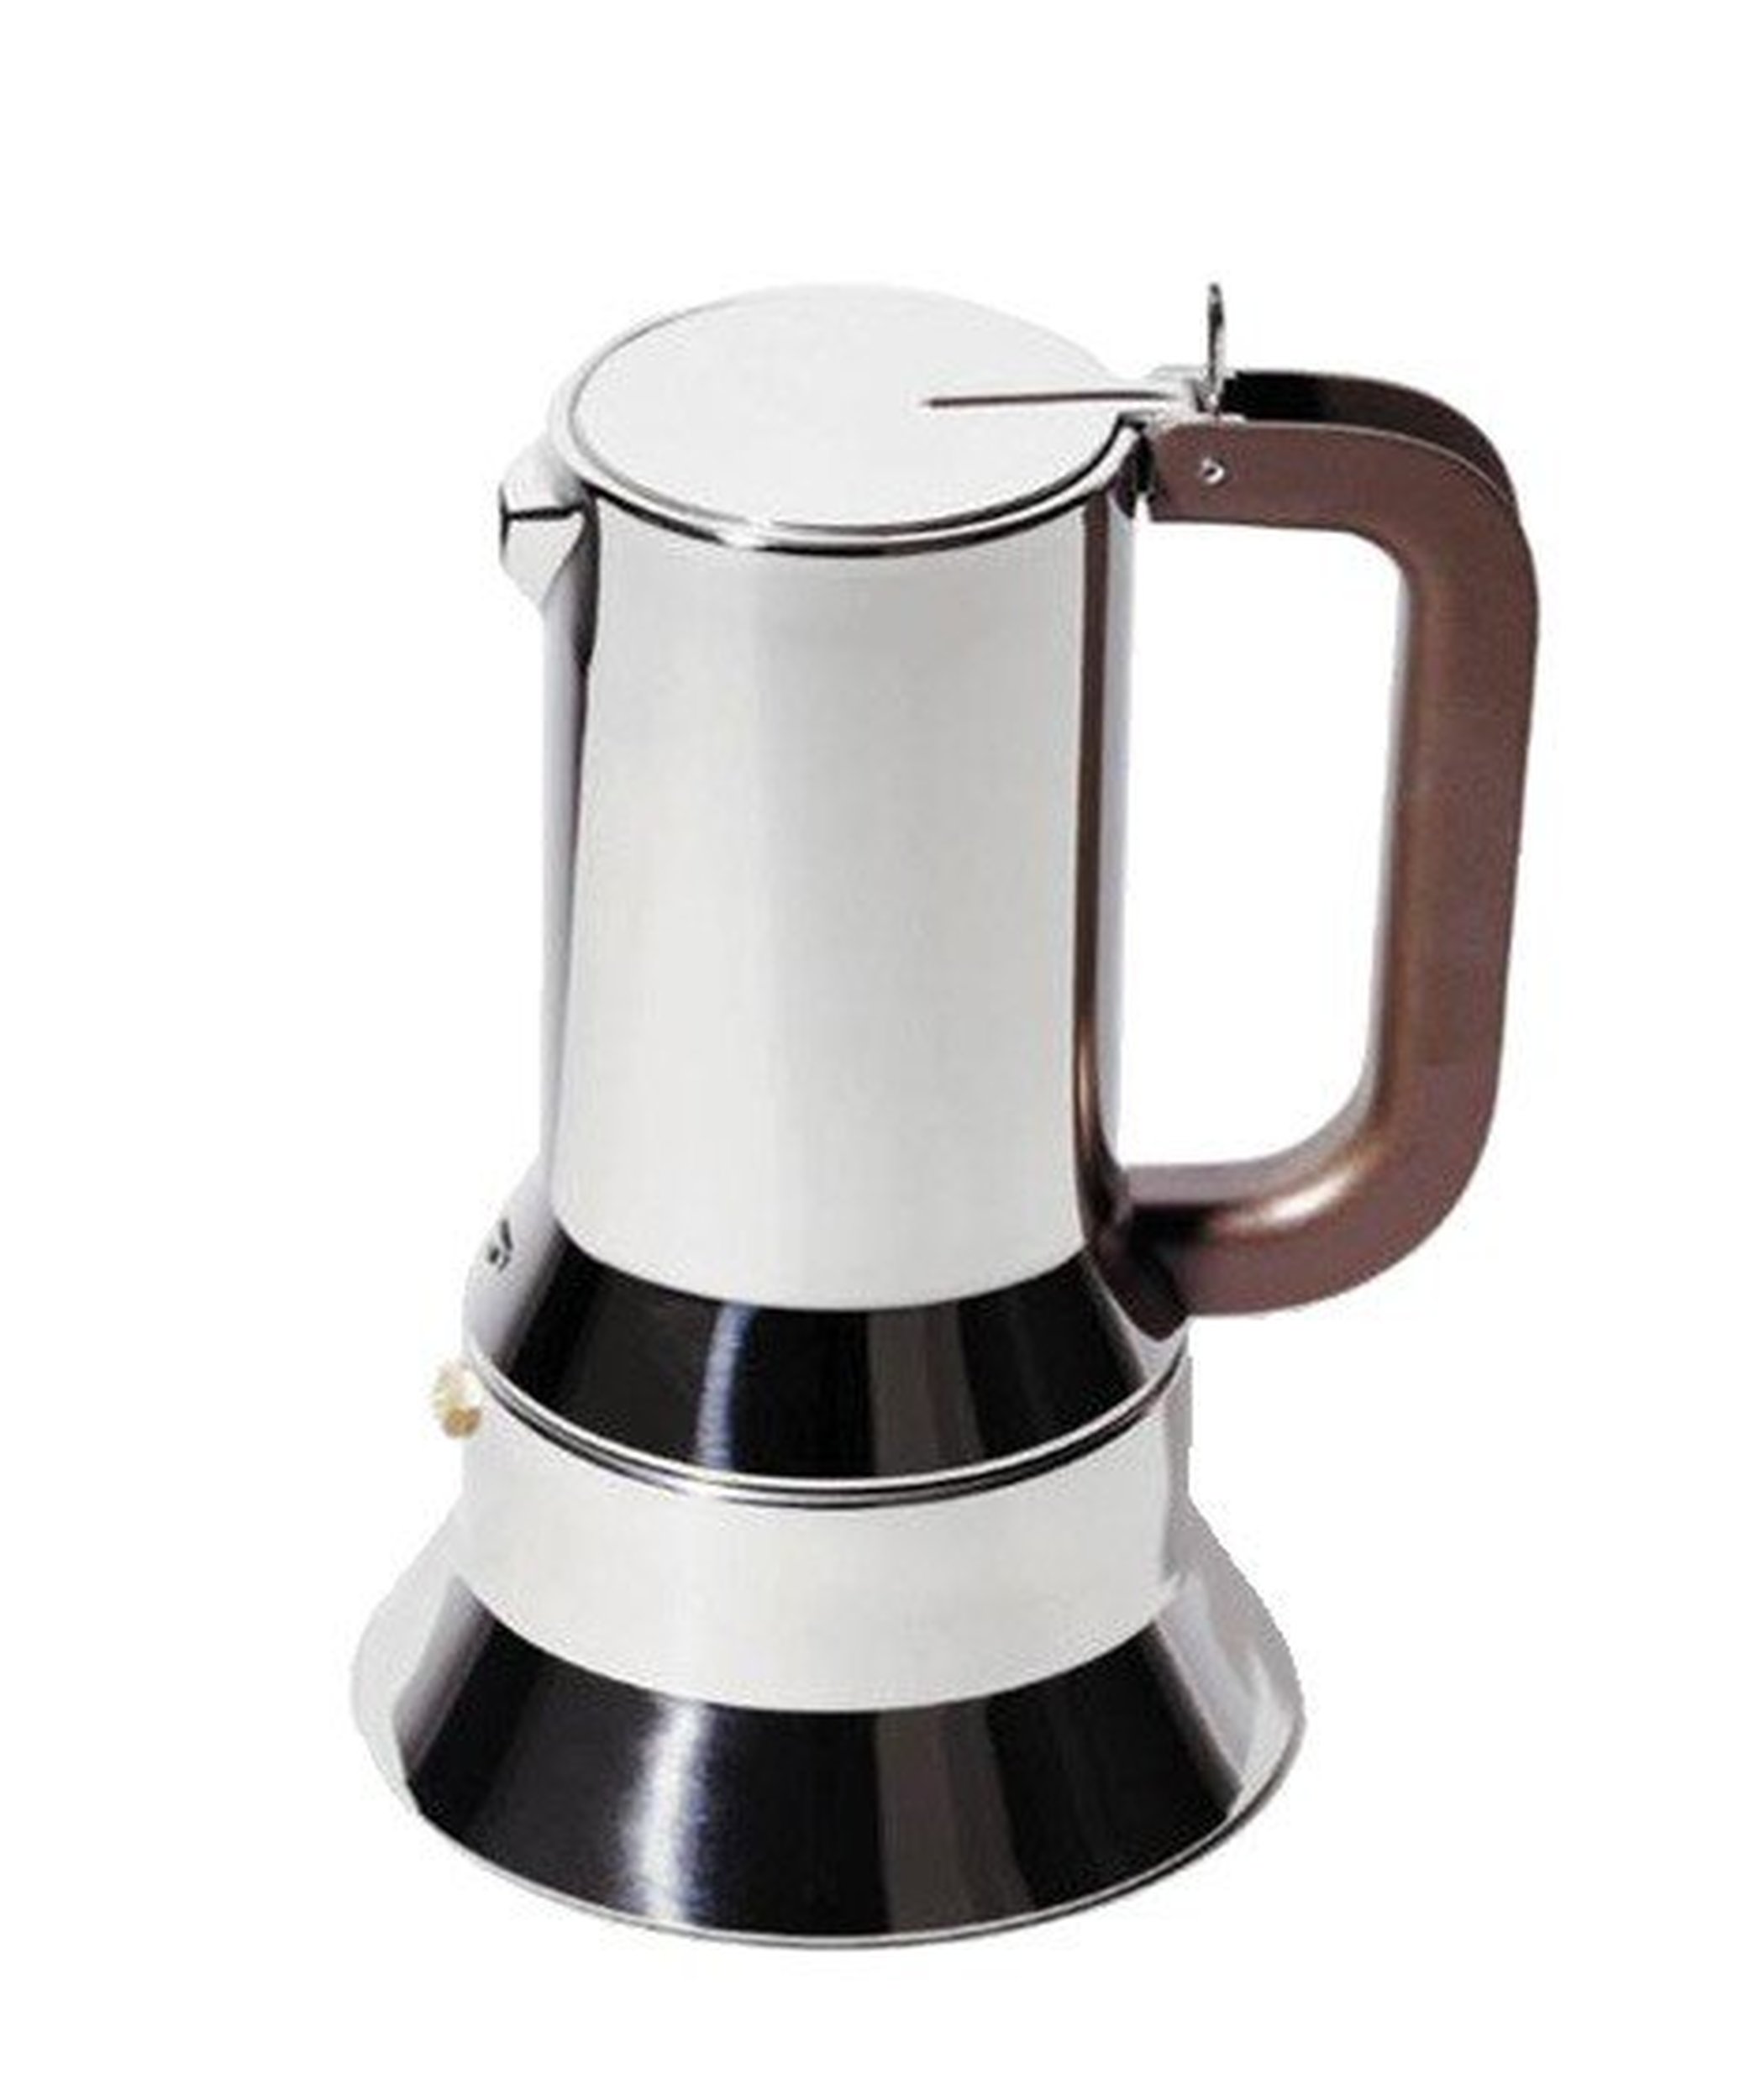 Espresso kávovar, prům. 9.5 cm - Alessi